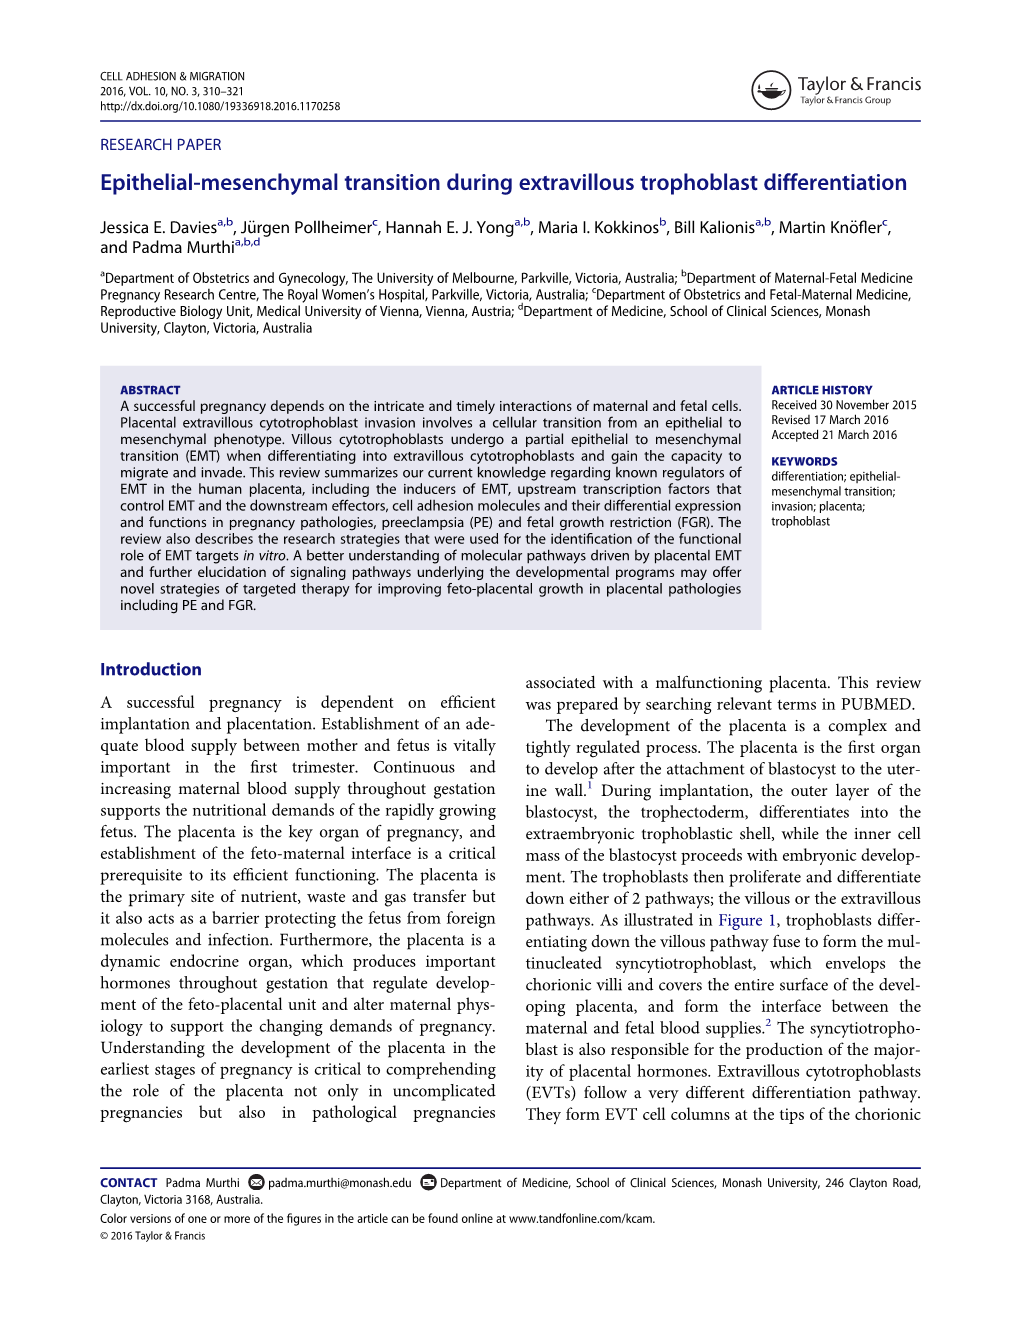 Epithelial-Mesenchymal Transition During Extravillous Trophoblast Differentiation